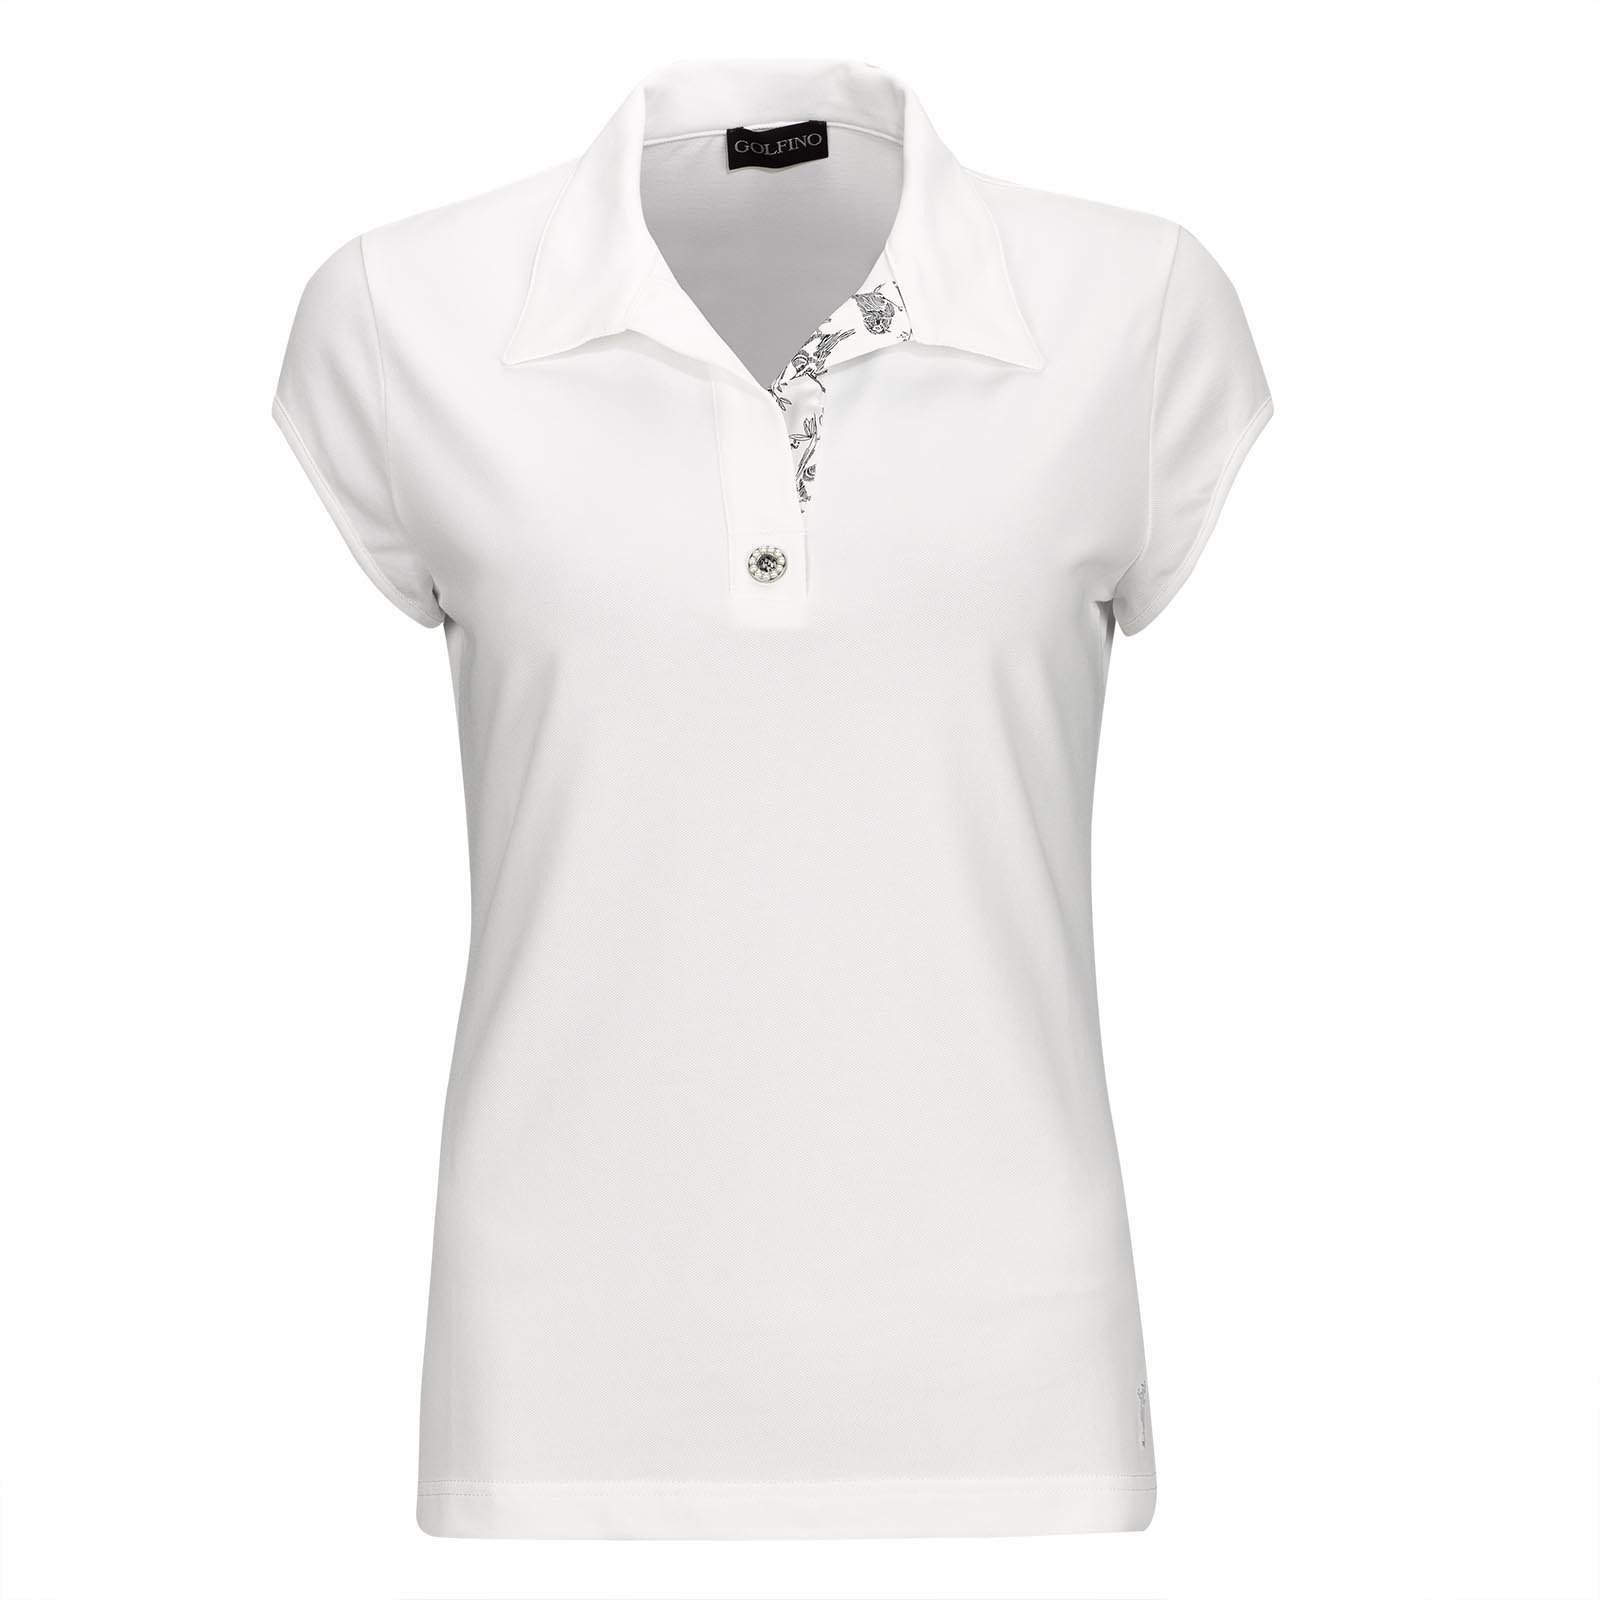 Koszulka Polo Golfino Pearls Cap Sleeve Koszulka Polo Do Golfa Damska White 40